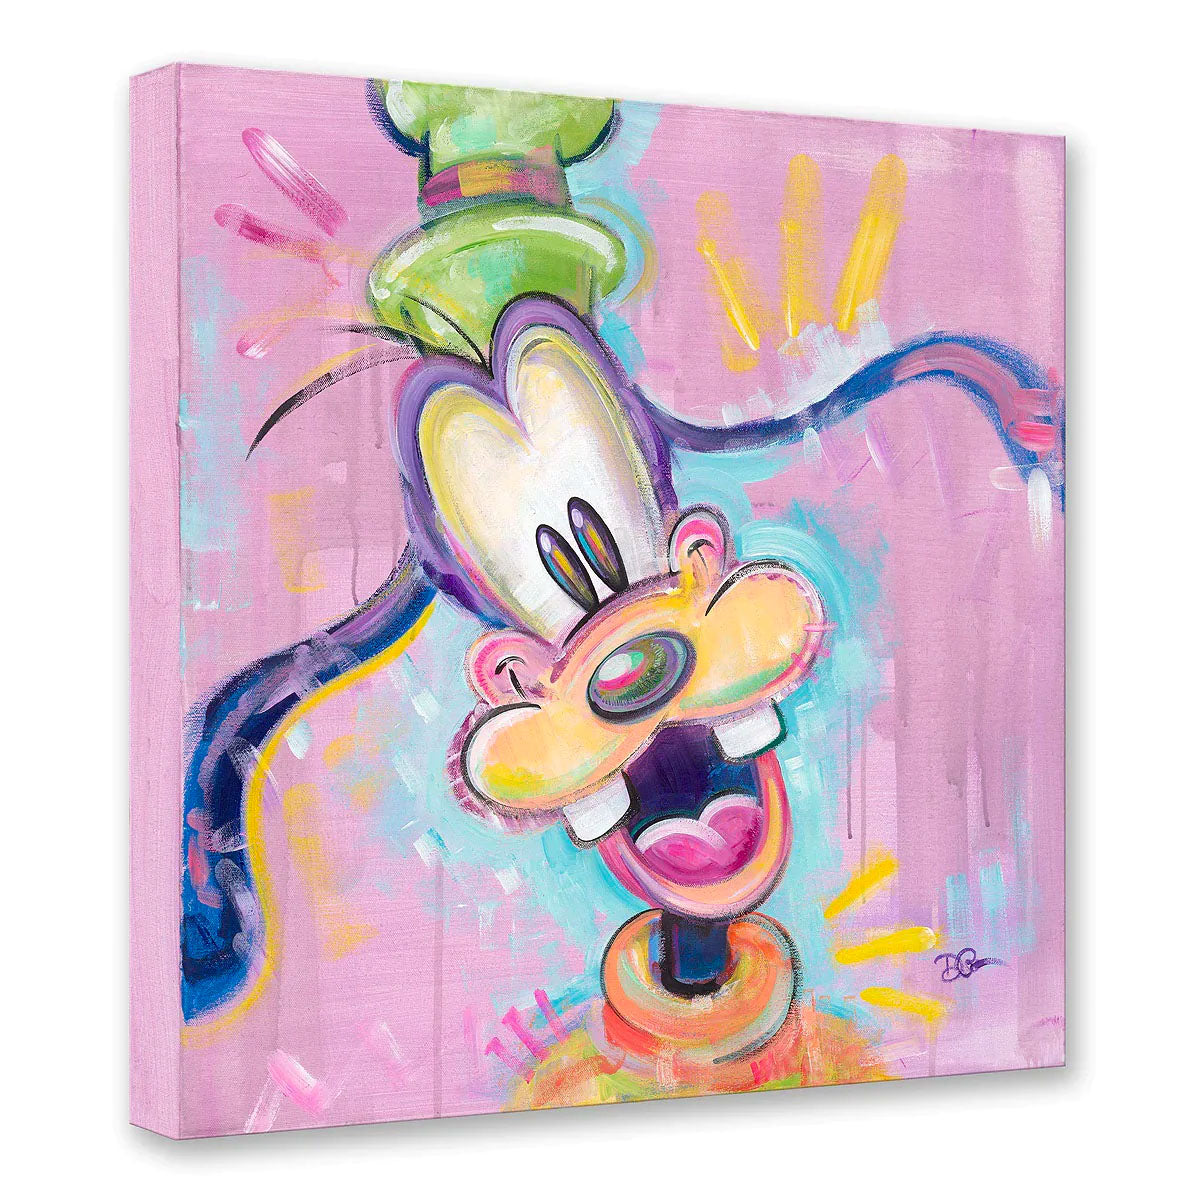 Dom Corona Disney "Naturally Goofy" Limited Edition Canvas Giclee